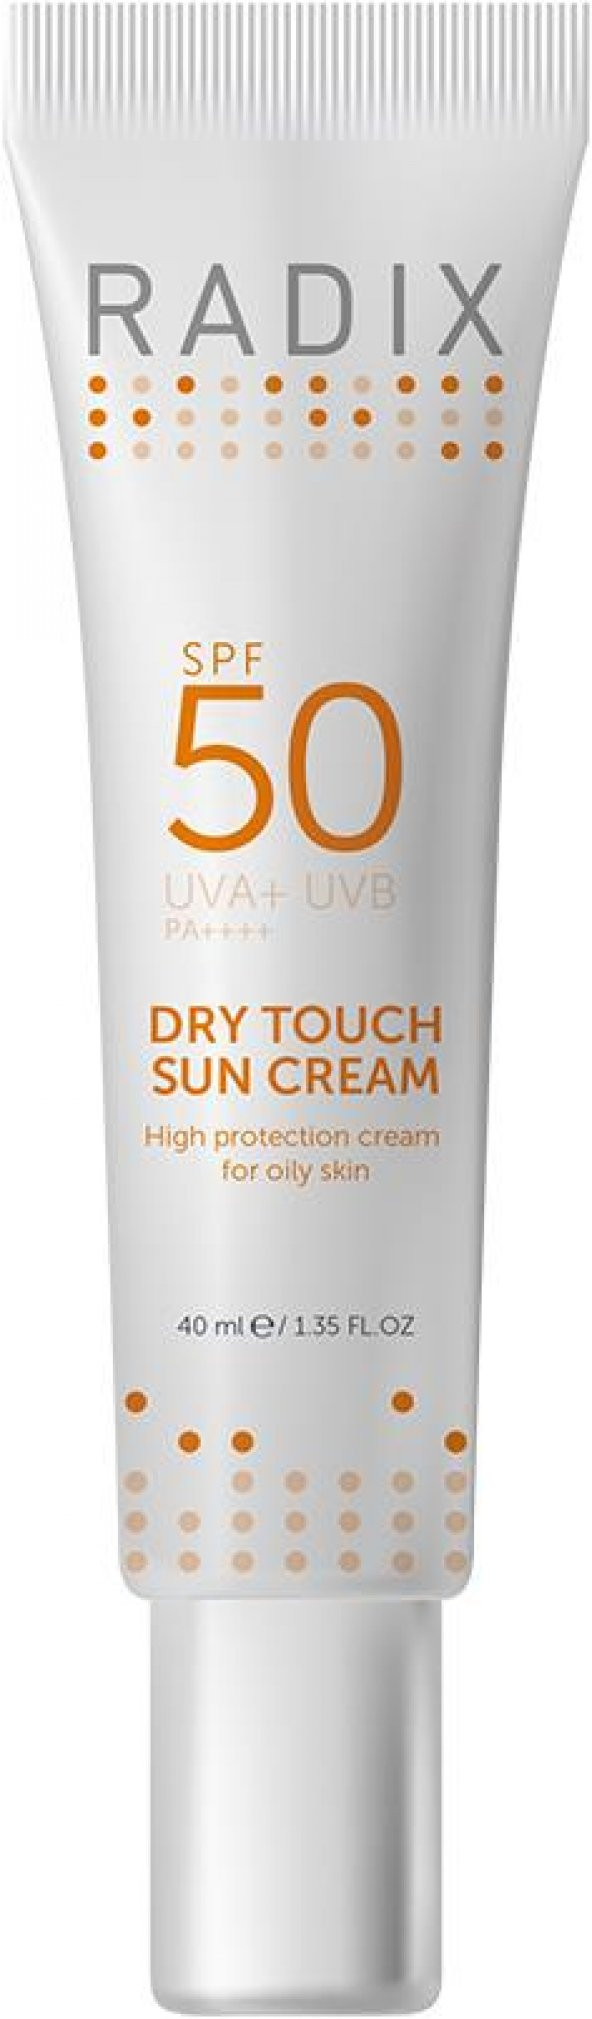 Radix Dry Touch Sun Cream SPF 50 40 ml